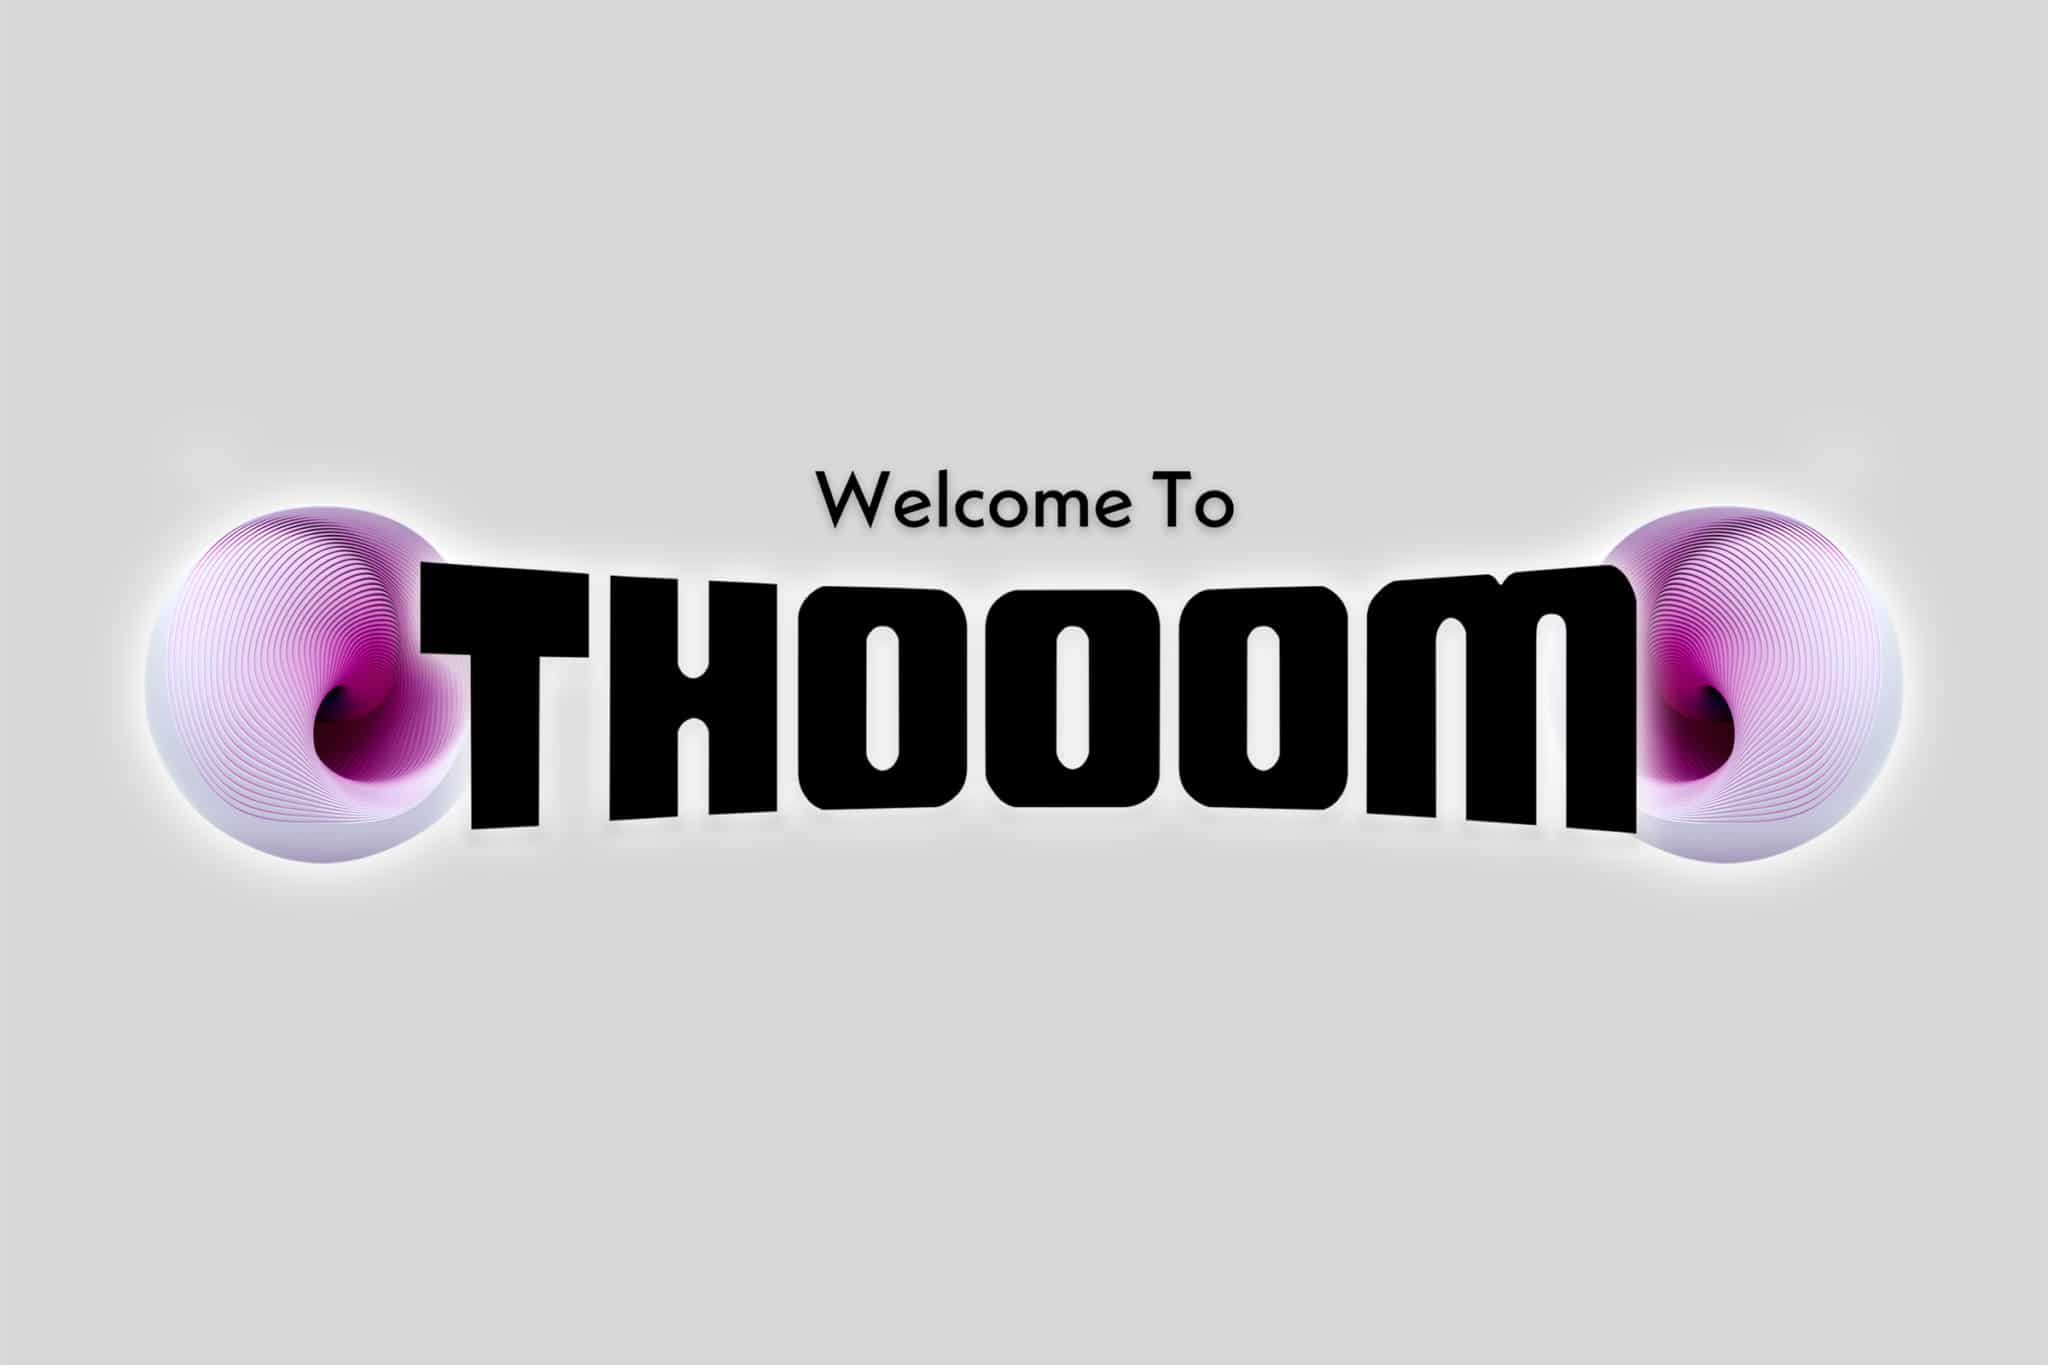 Welcome to THOOOM